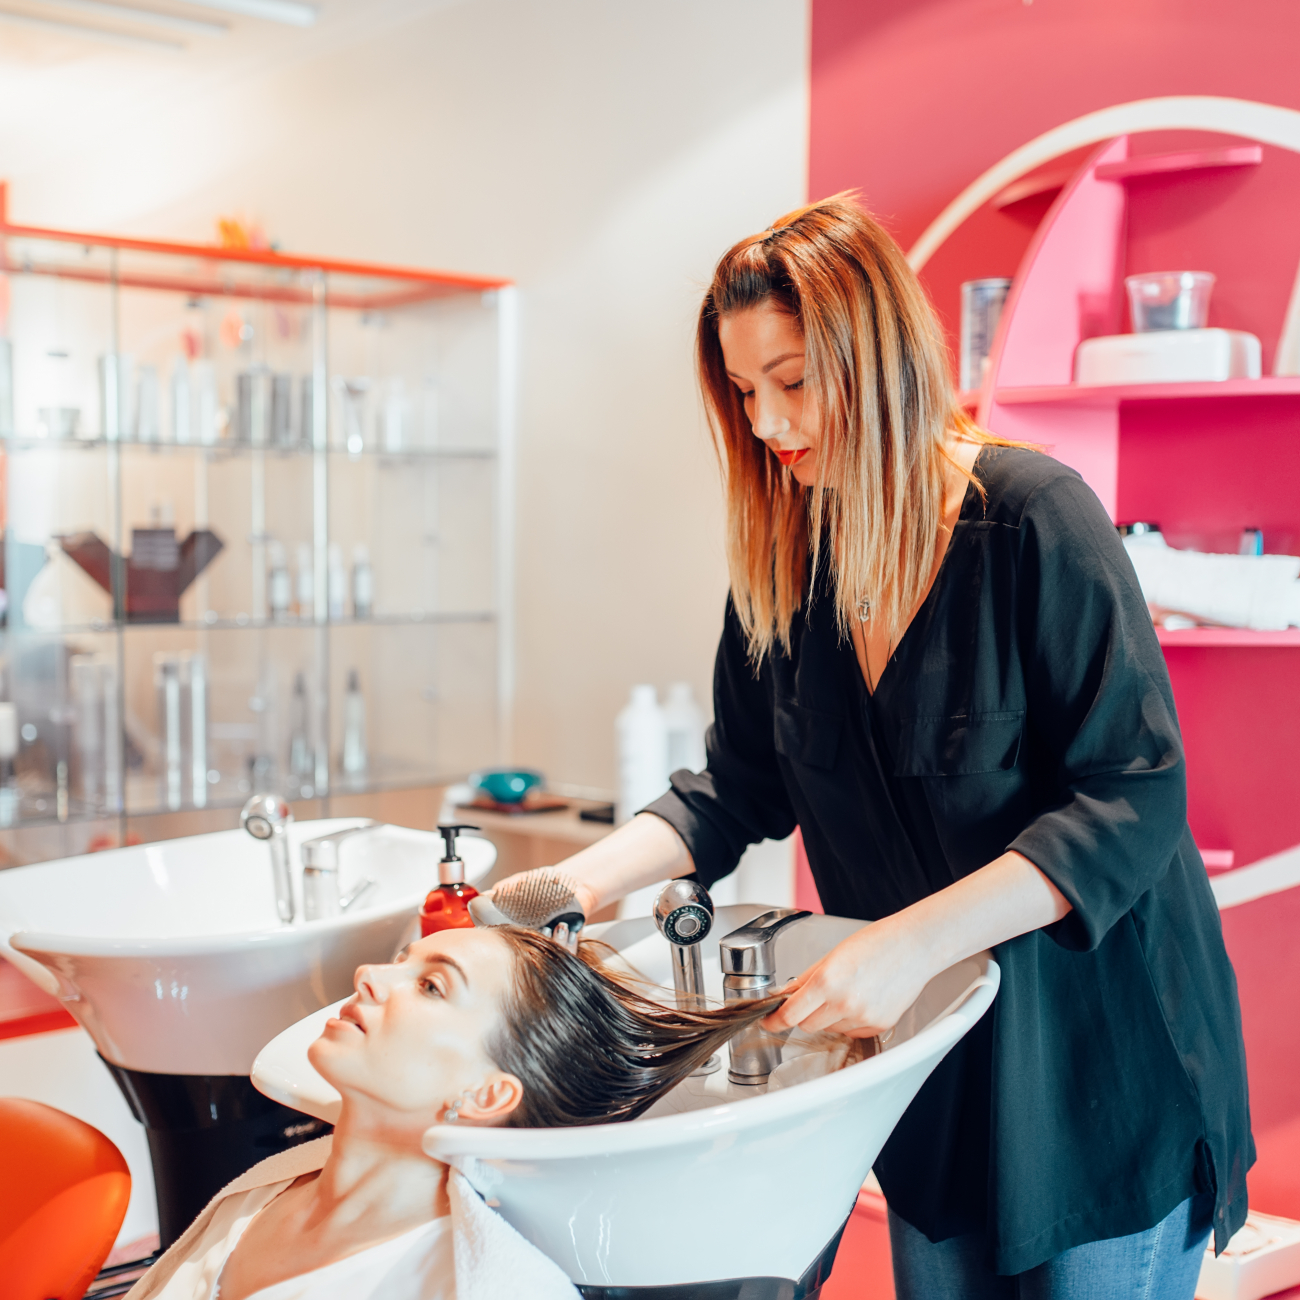 Lady receiving hair wash in salon